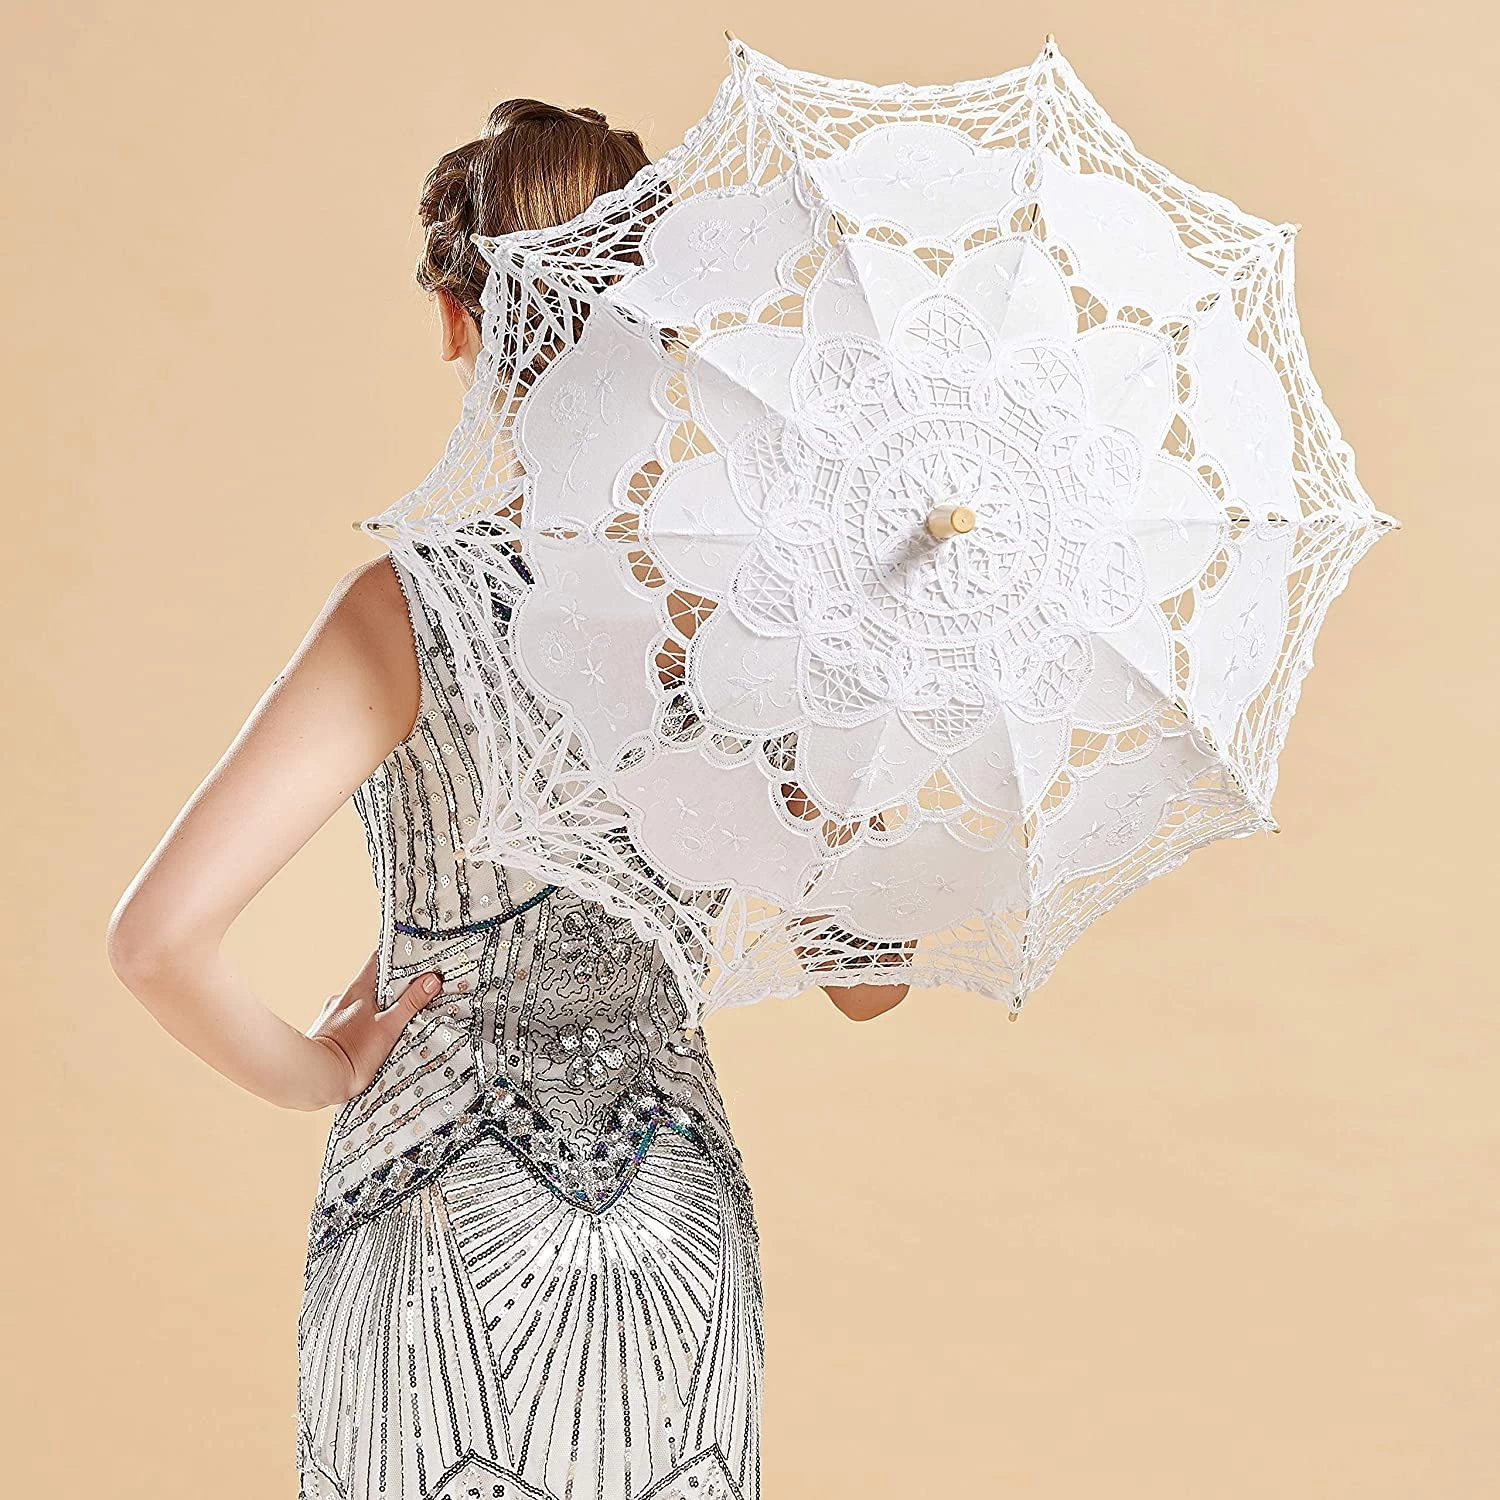 European Bride Embroidery Cotton Wedding Lace umbrella in Wedding